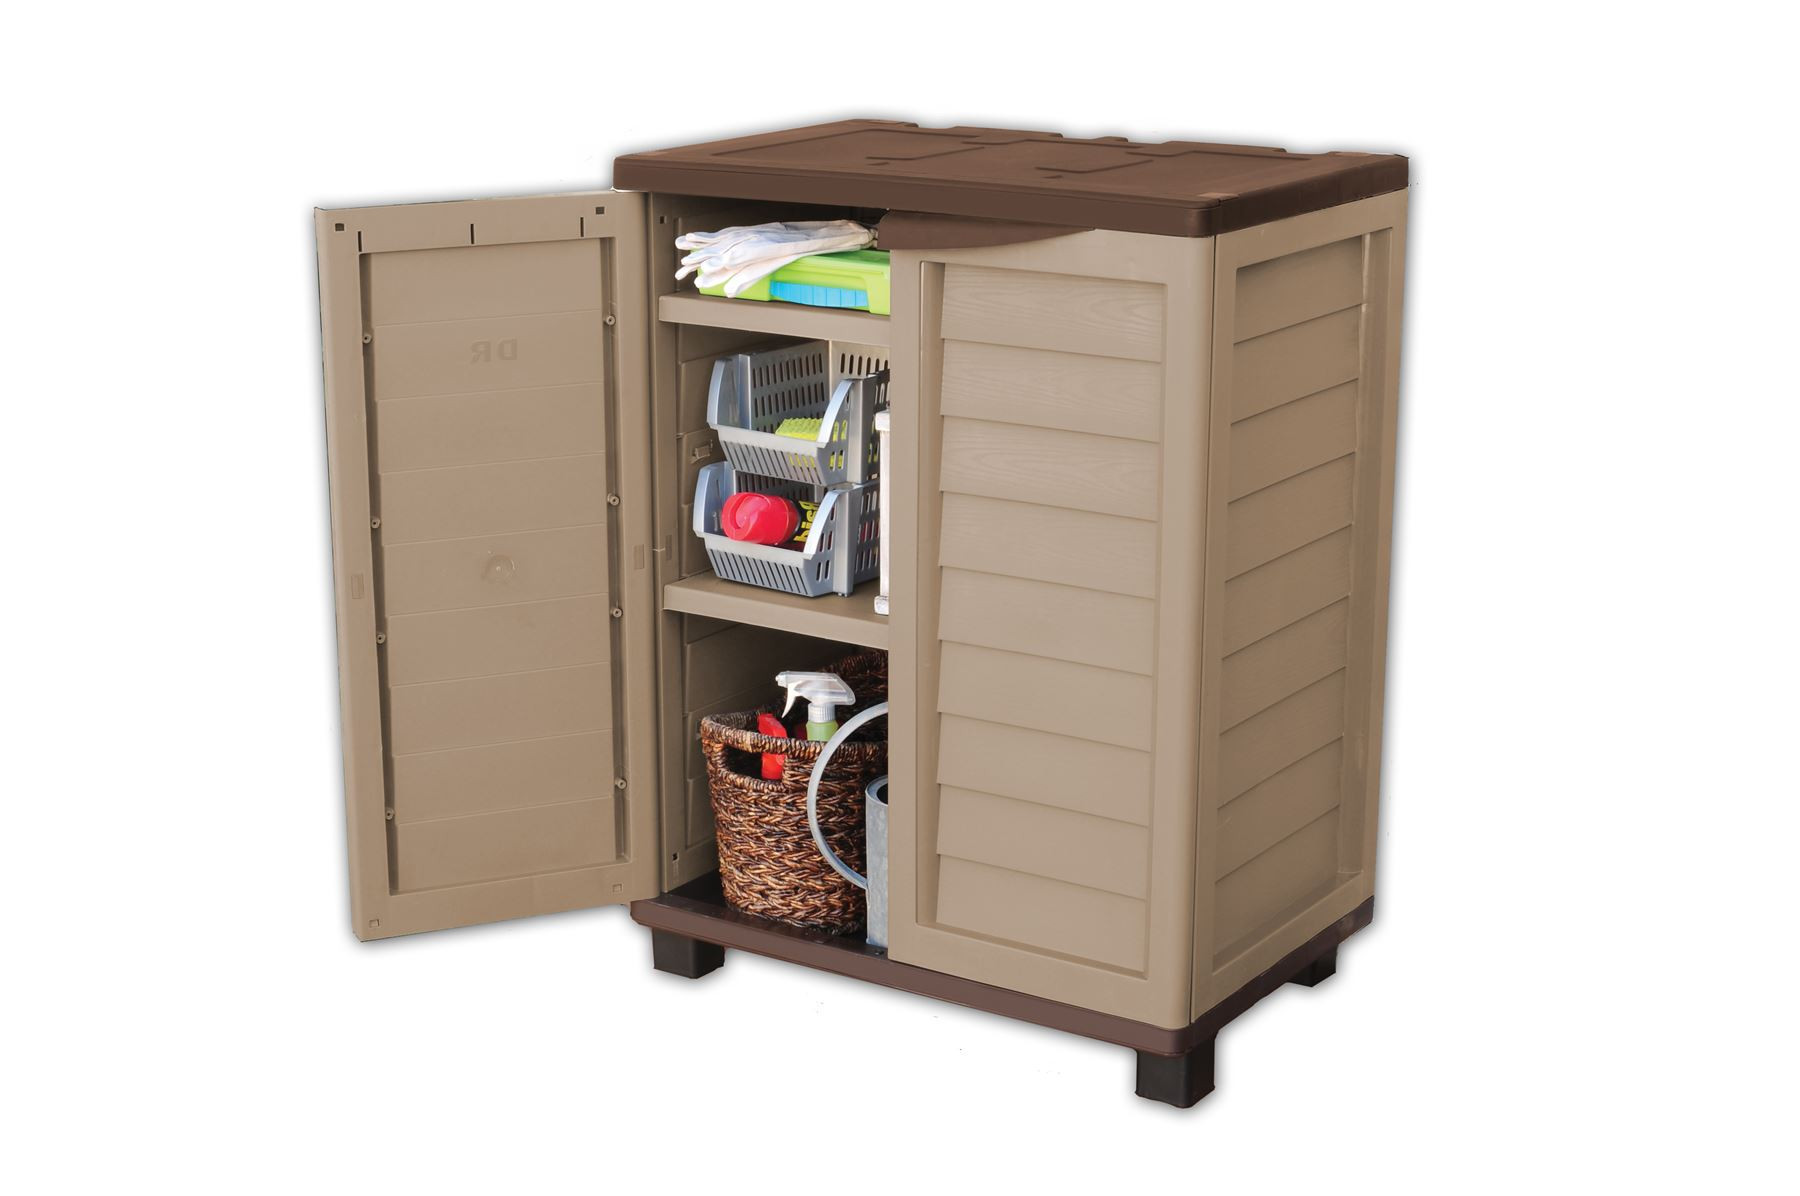 Best ideas about Indoor Storage Cabinets
. Save or Pin Garden Indoor Outdoor Garage Storage Low Utility Cabinet Now.